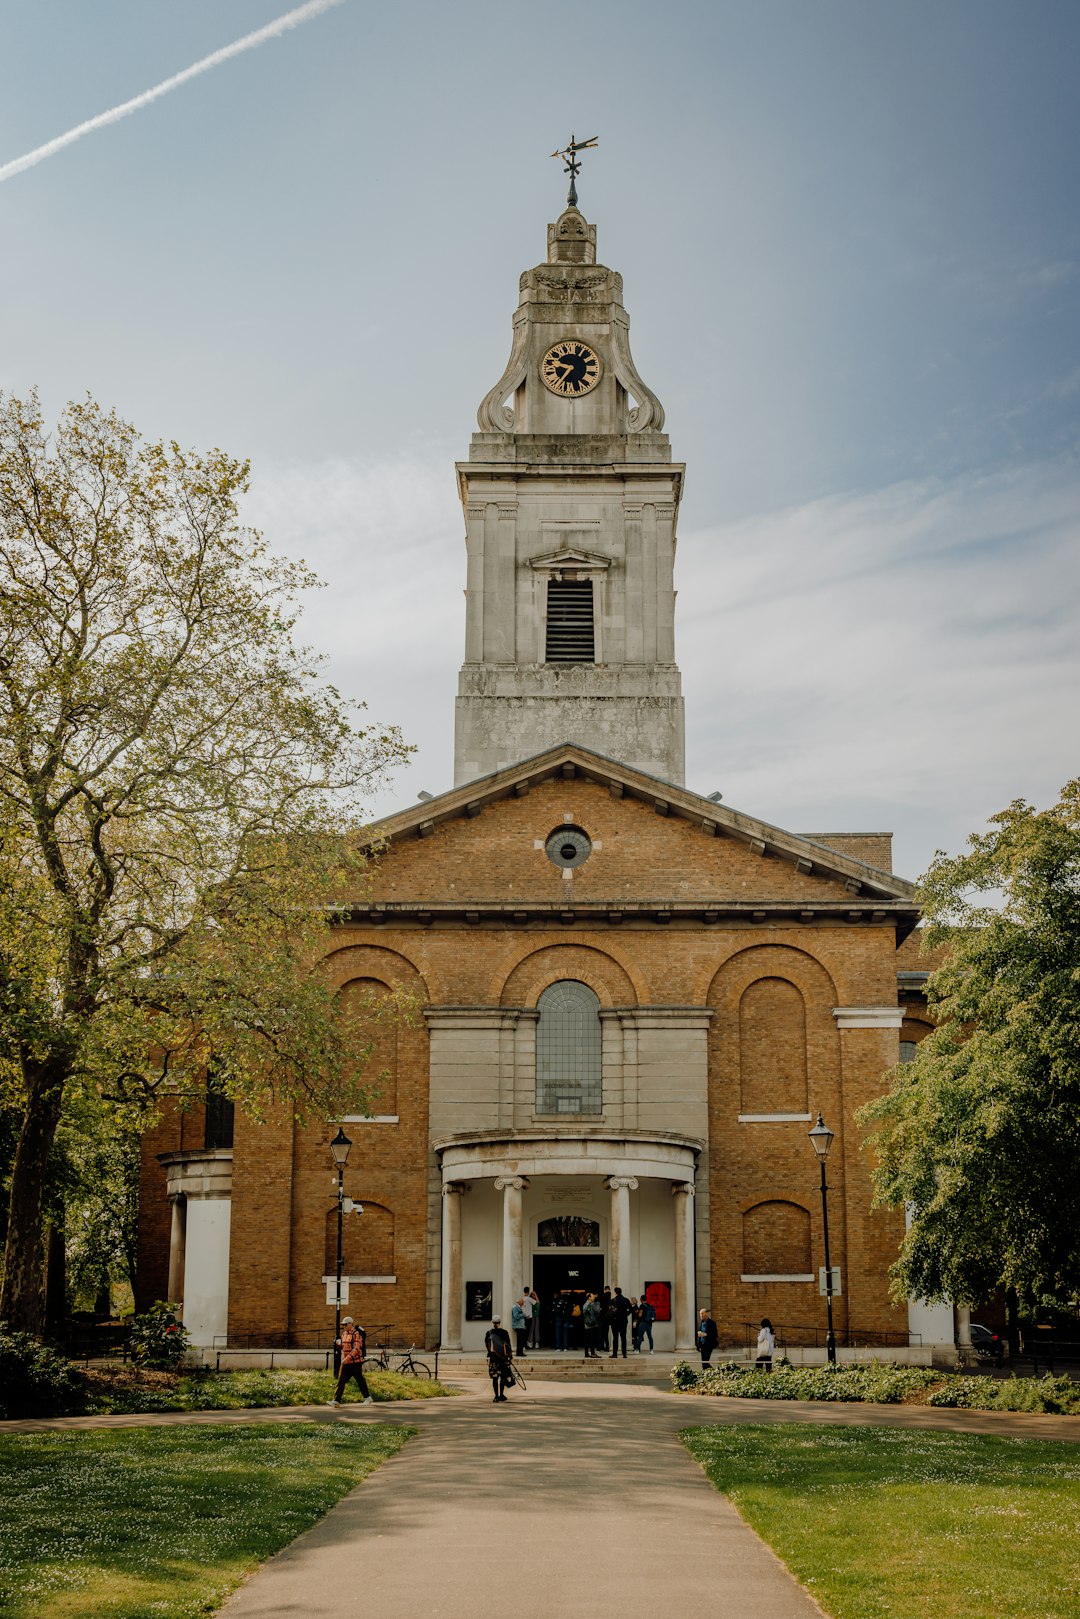 The Church of St John at Hackney, London